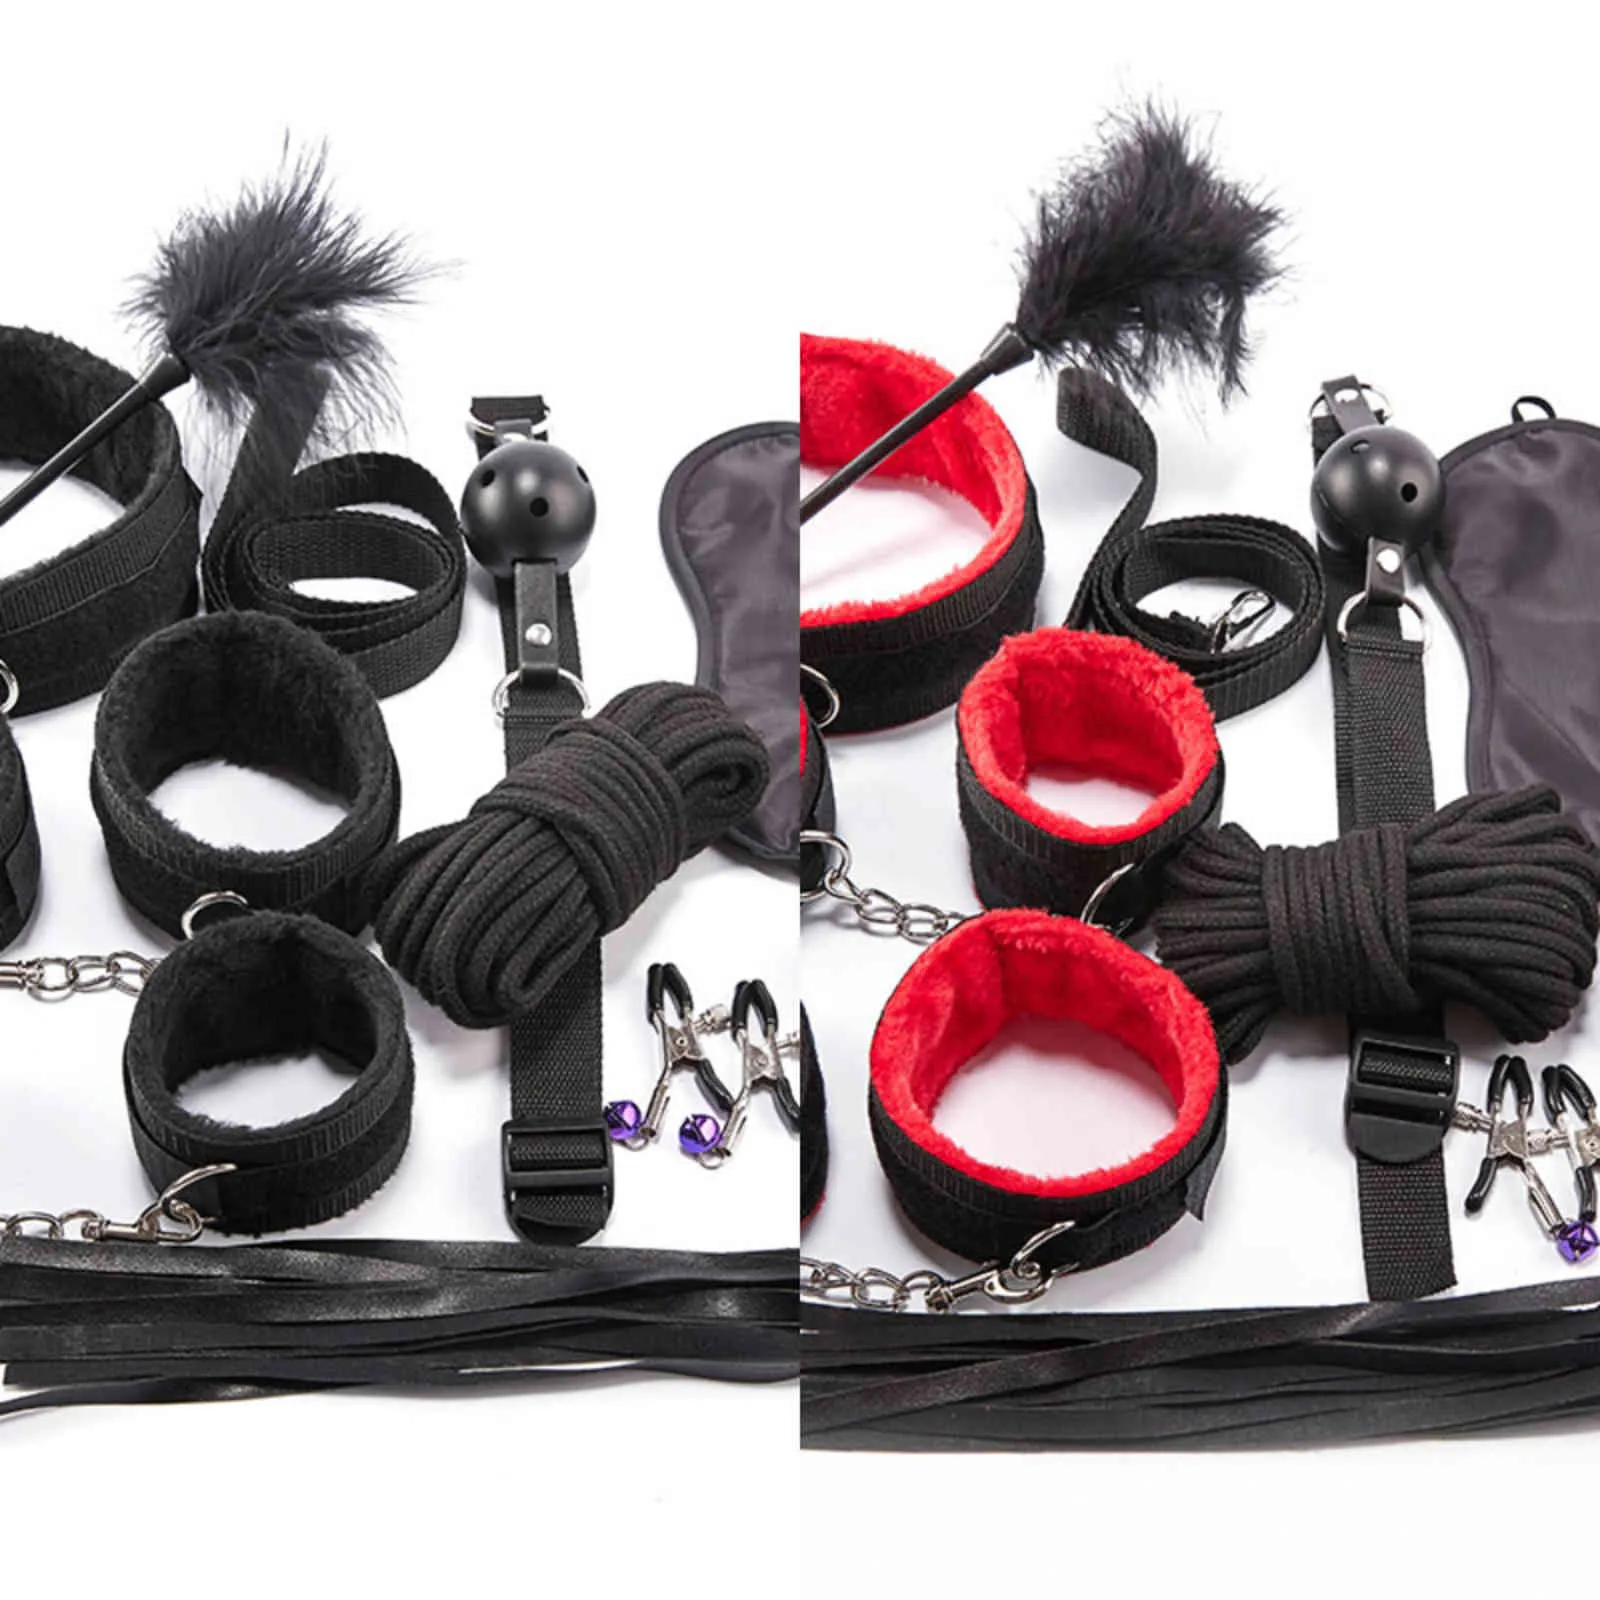 Bondages Black 10Pcs BDSM Kits Sex Products Erotic Toys Adults Bondage Set Handcuffs Nipple Clamps Gag Whip Rope For Couples 1122